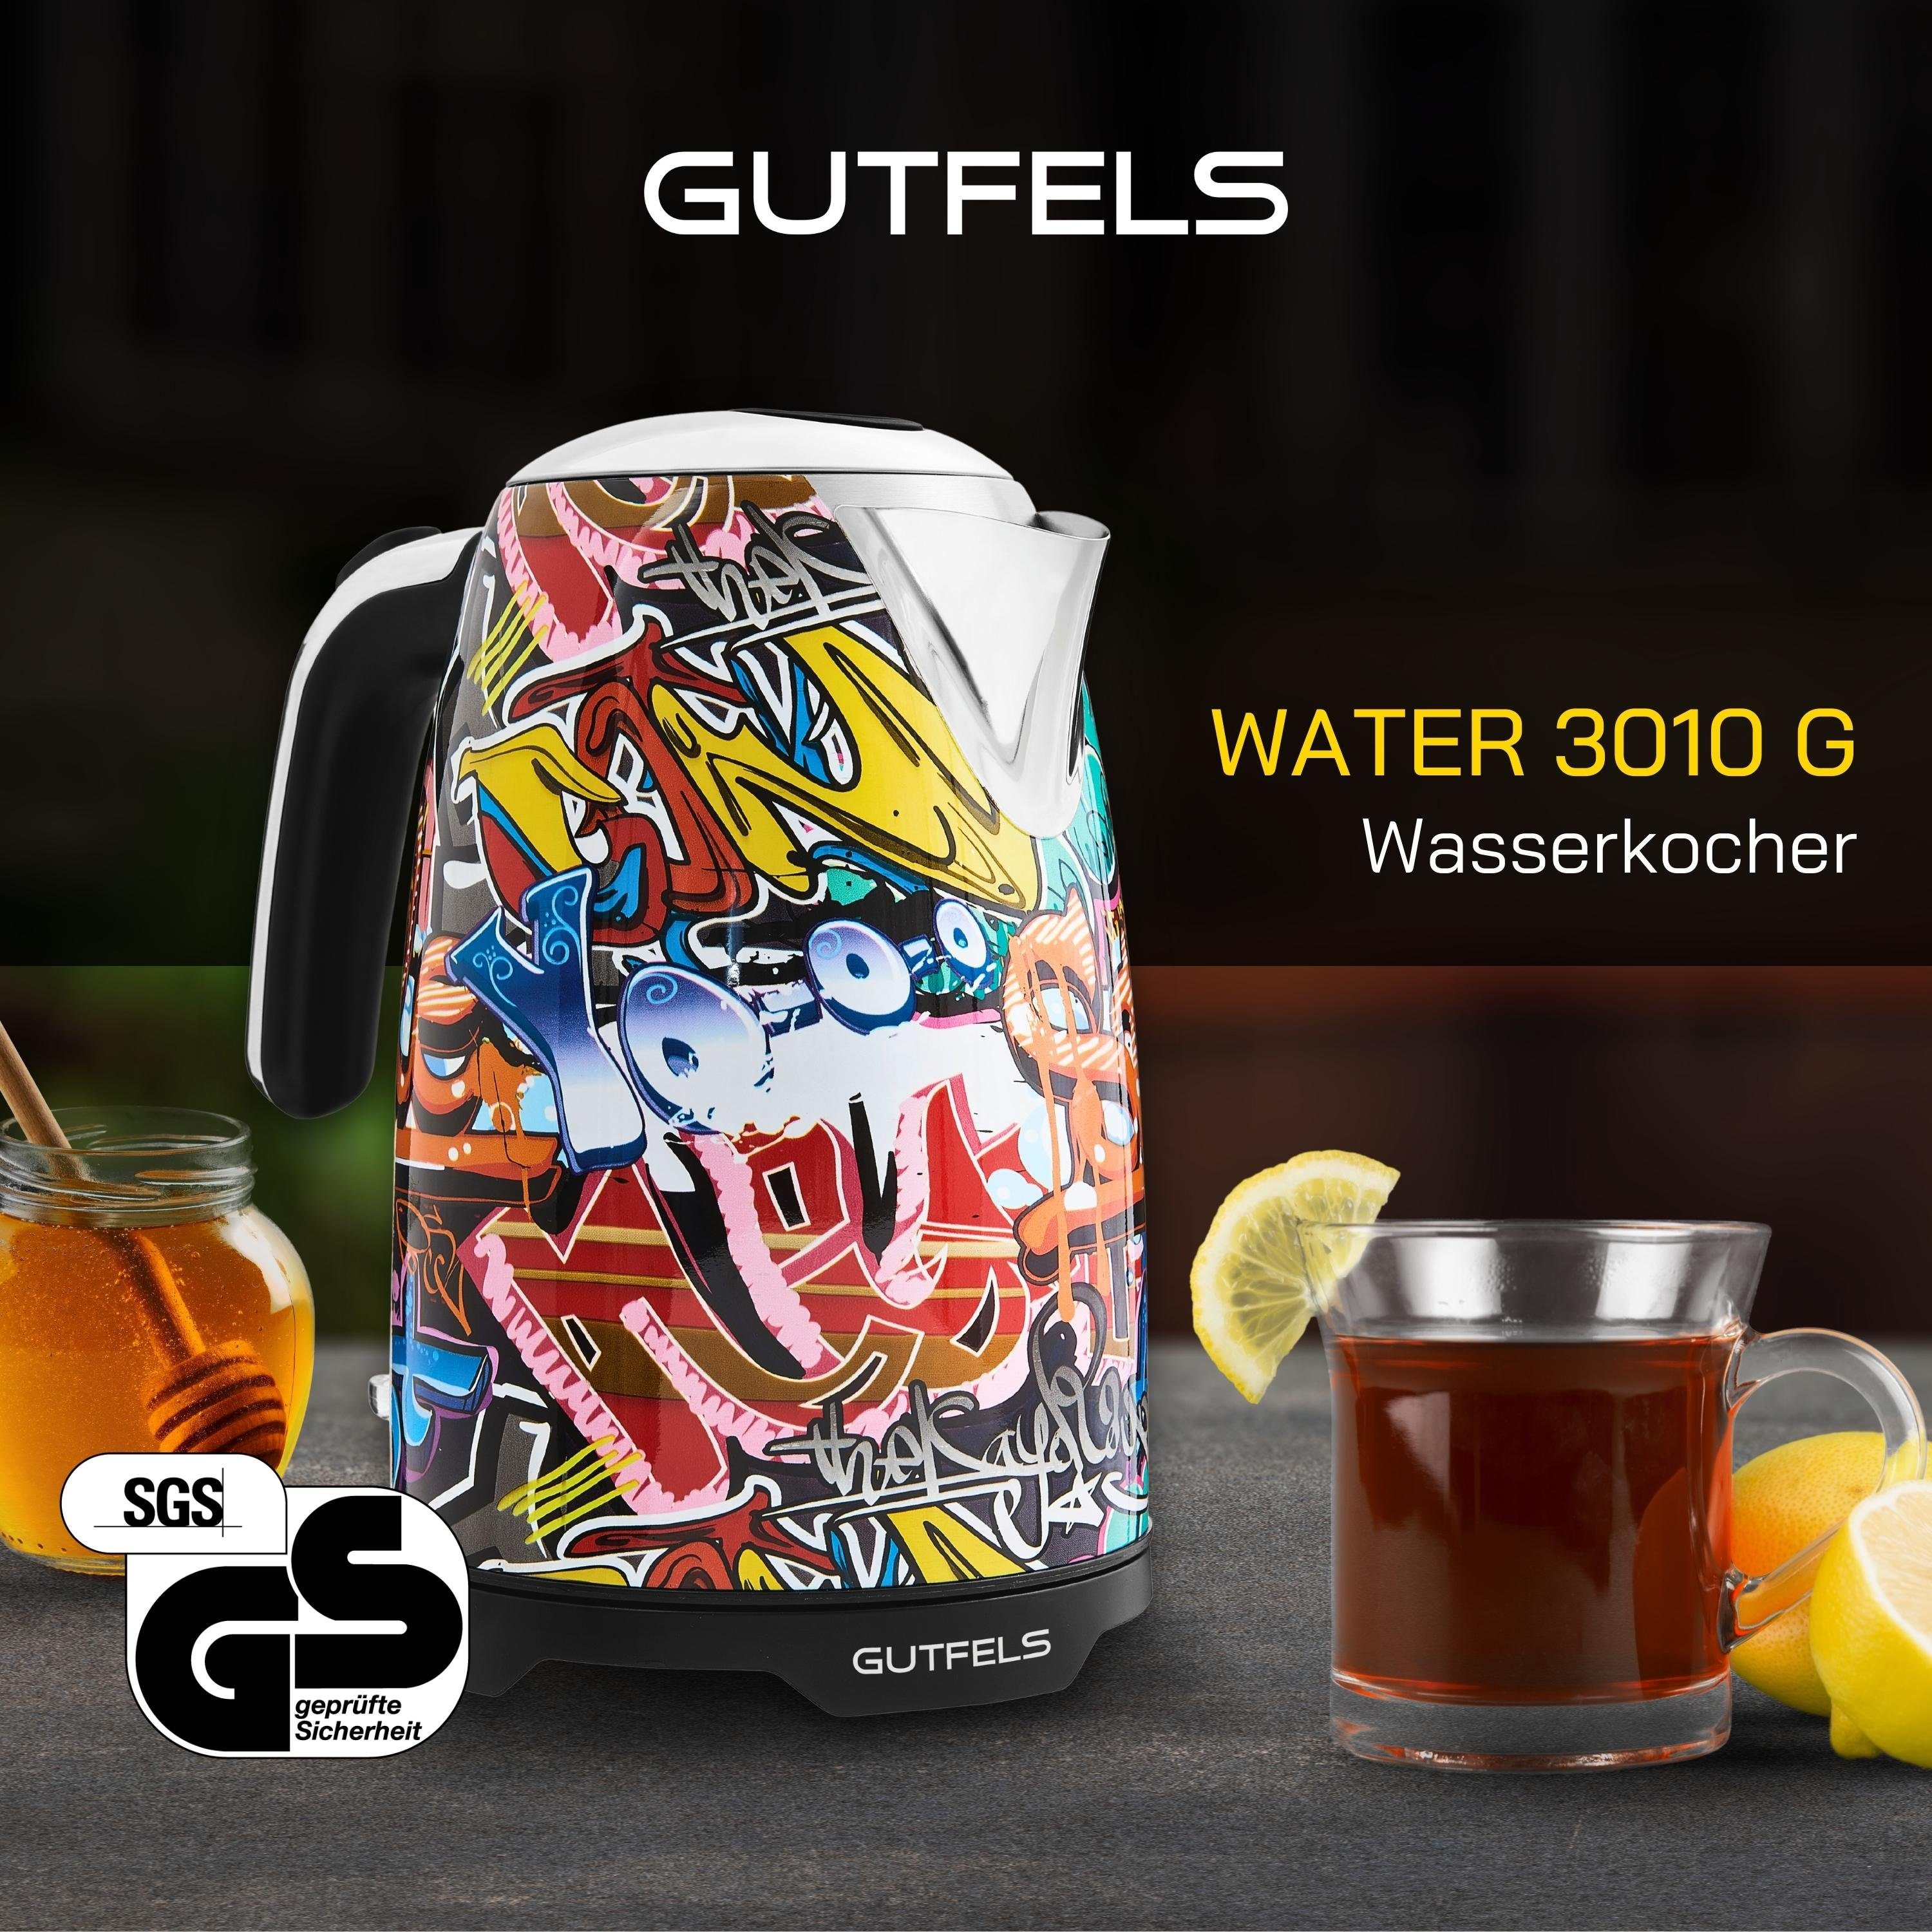 Gutfels Wasserkocher 2200 Watt, 360 2200 W, WATER Liter, Sockel Grad 1,7 3010 G, Graffiti-Style